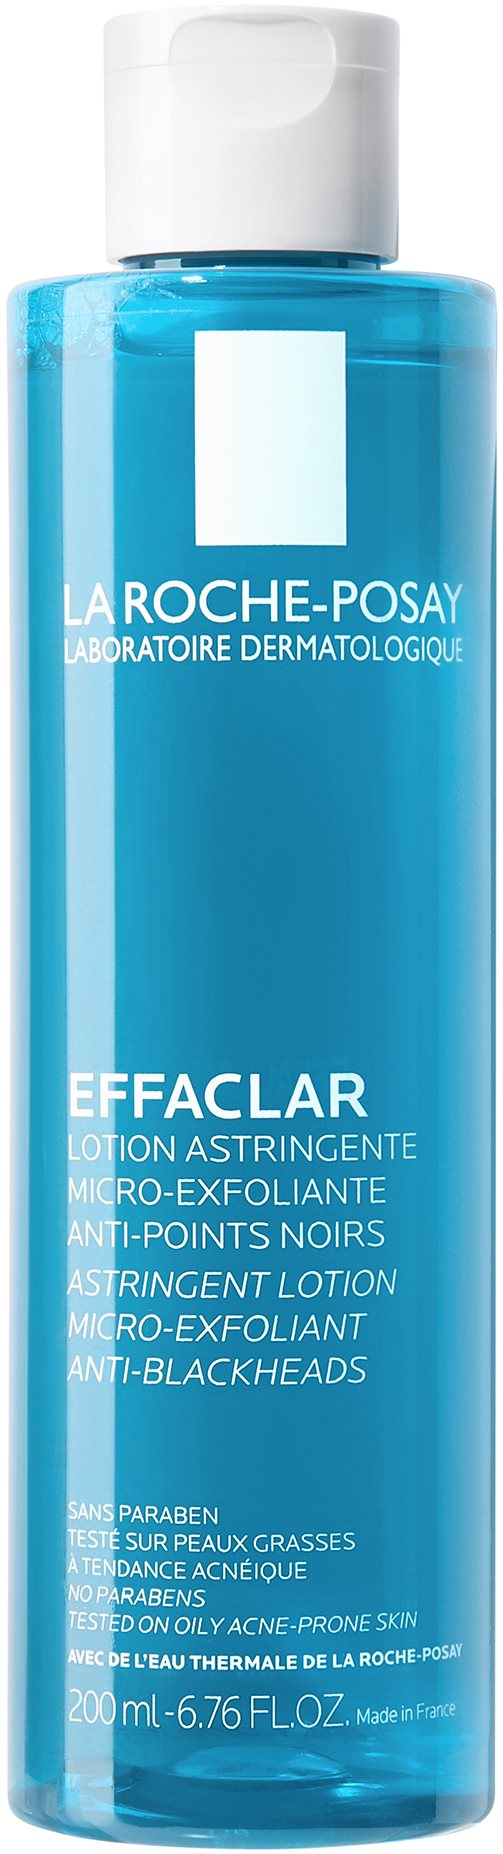 Arctonik LA ROCHE-POSAY Effaclar Astringent Lotion Micro-Exfoliant 200 ml